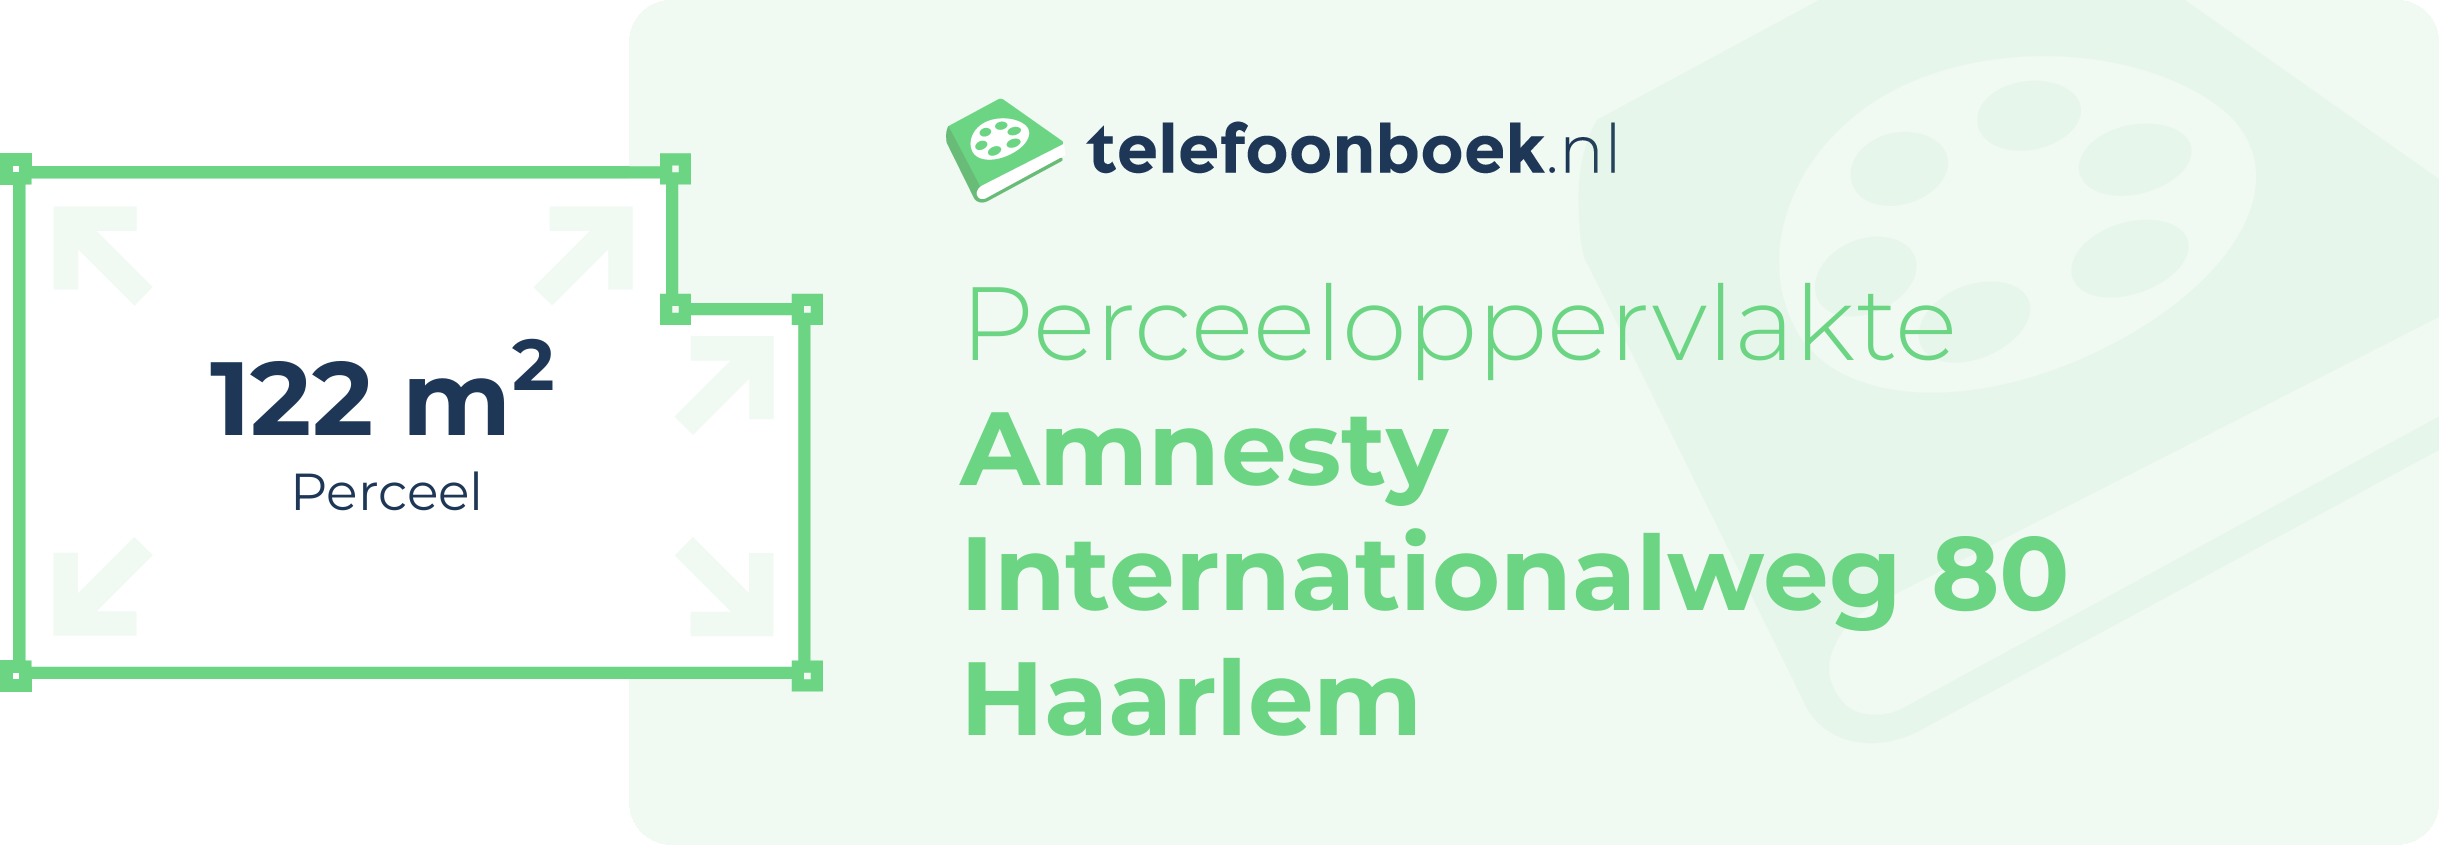 Perceeloppervlakte Amnesty Internationalweg 80 Haarlem